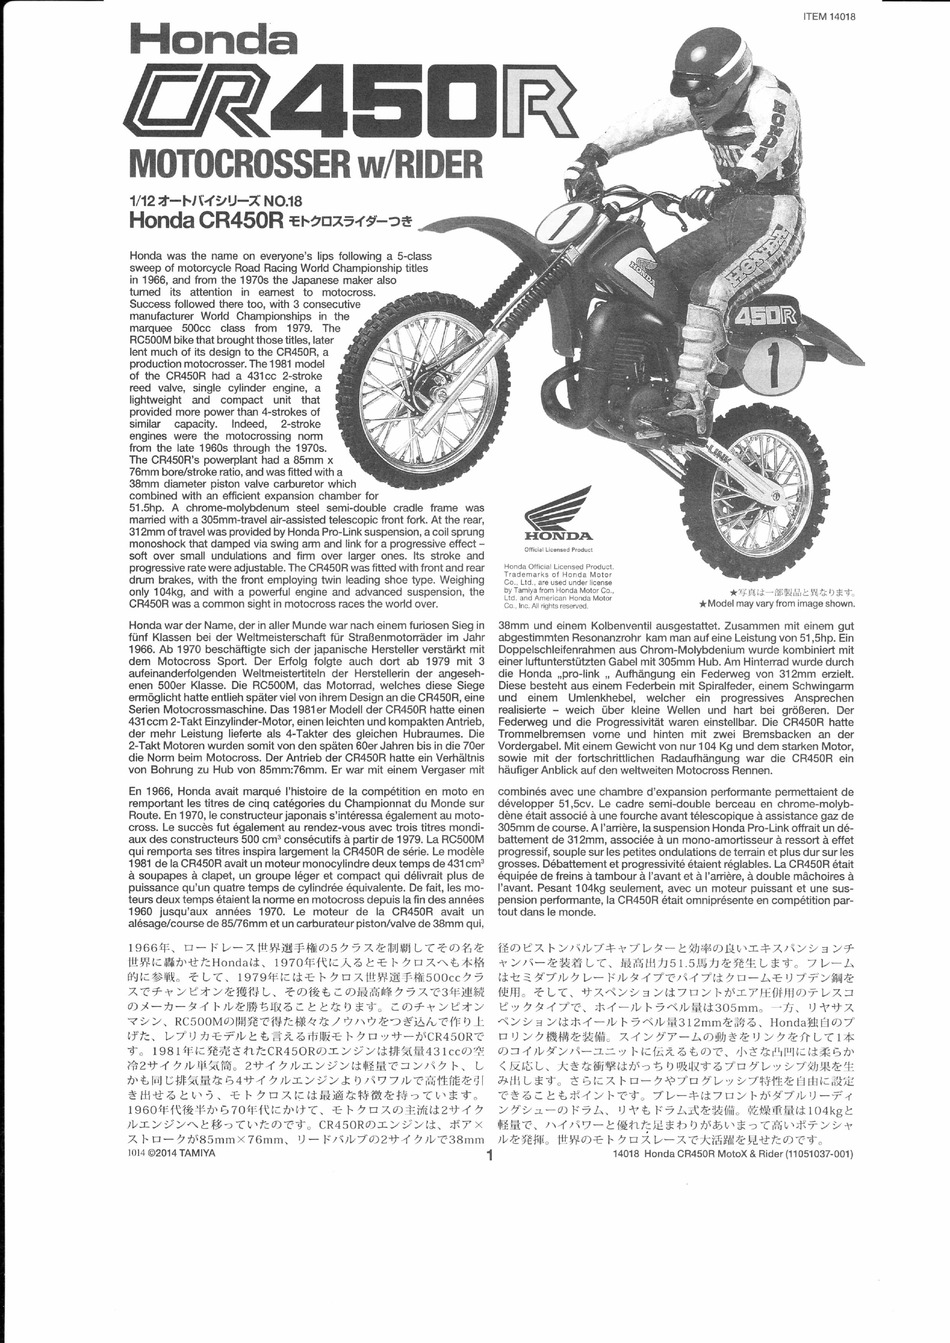 Tamiya 1/12 Motorcycle No.18 Honda CR450R with motocross rider Plastic 14018 